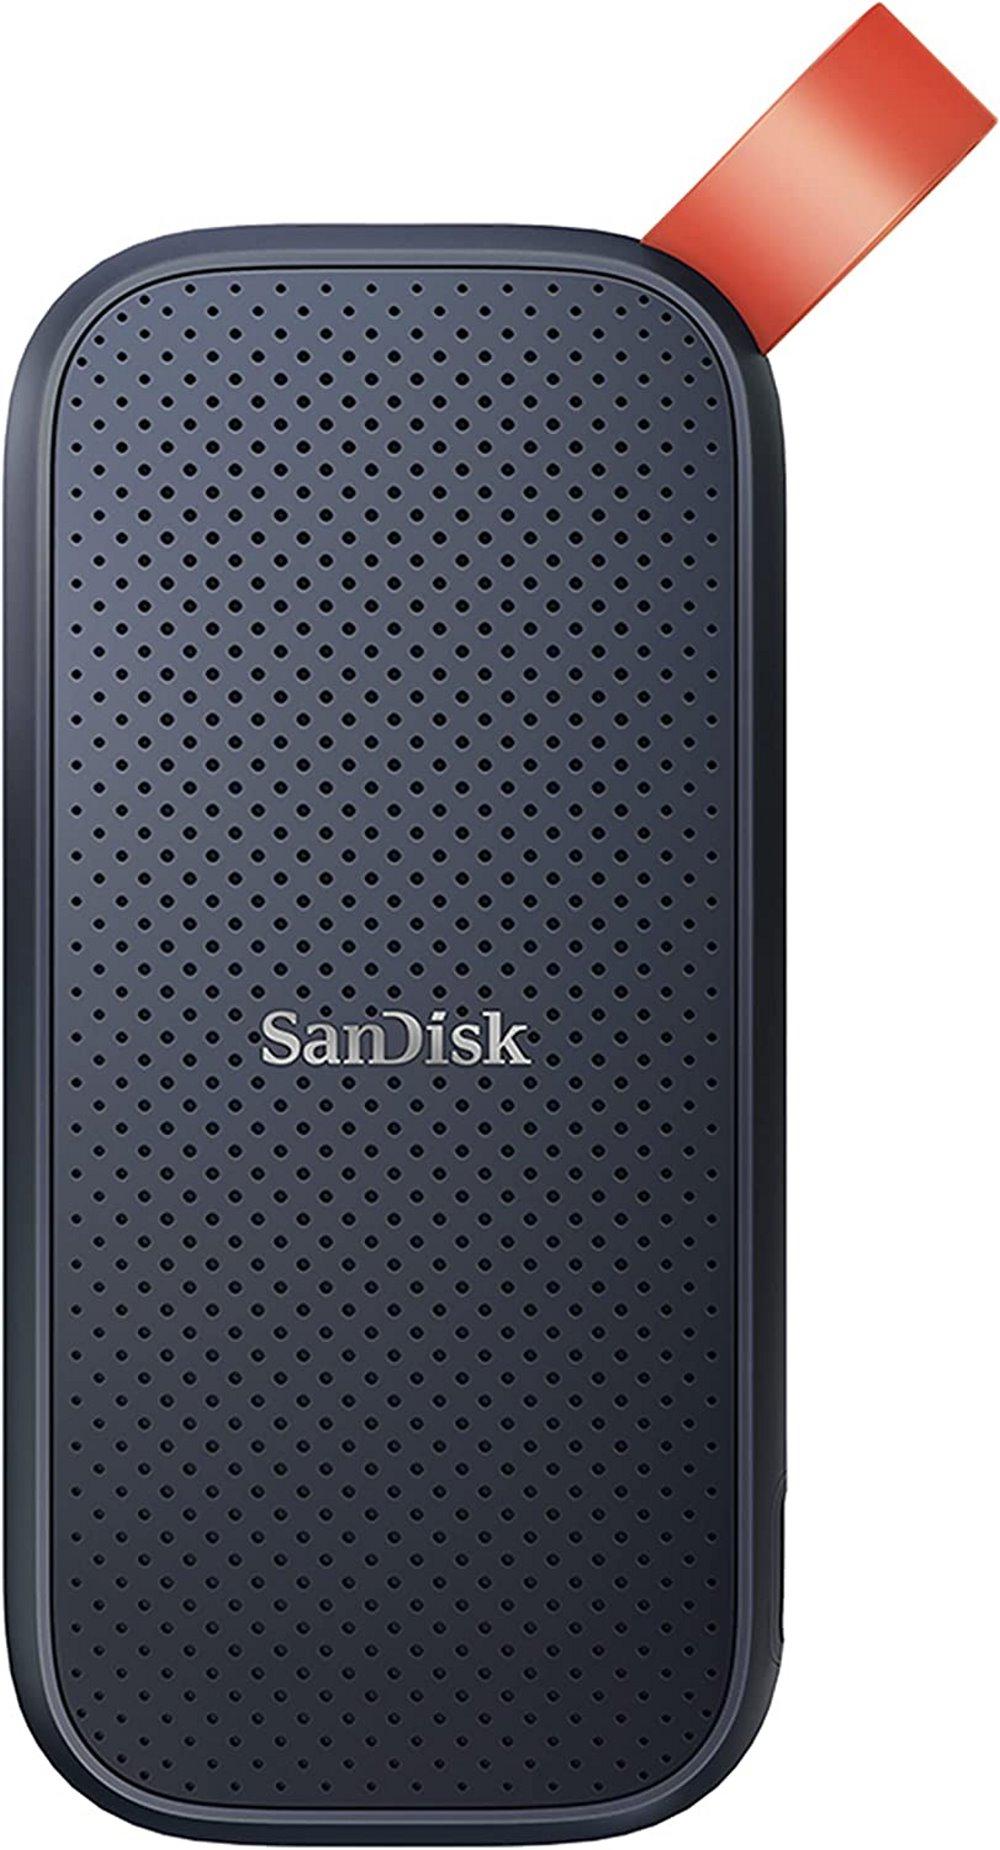 SanDisk Portable 1 TB